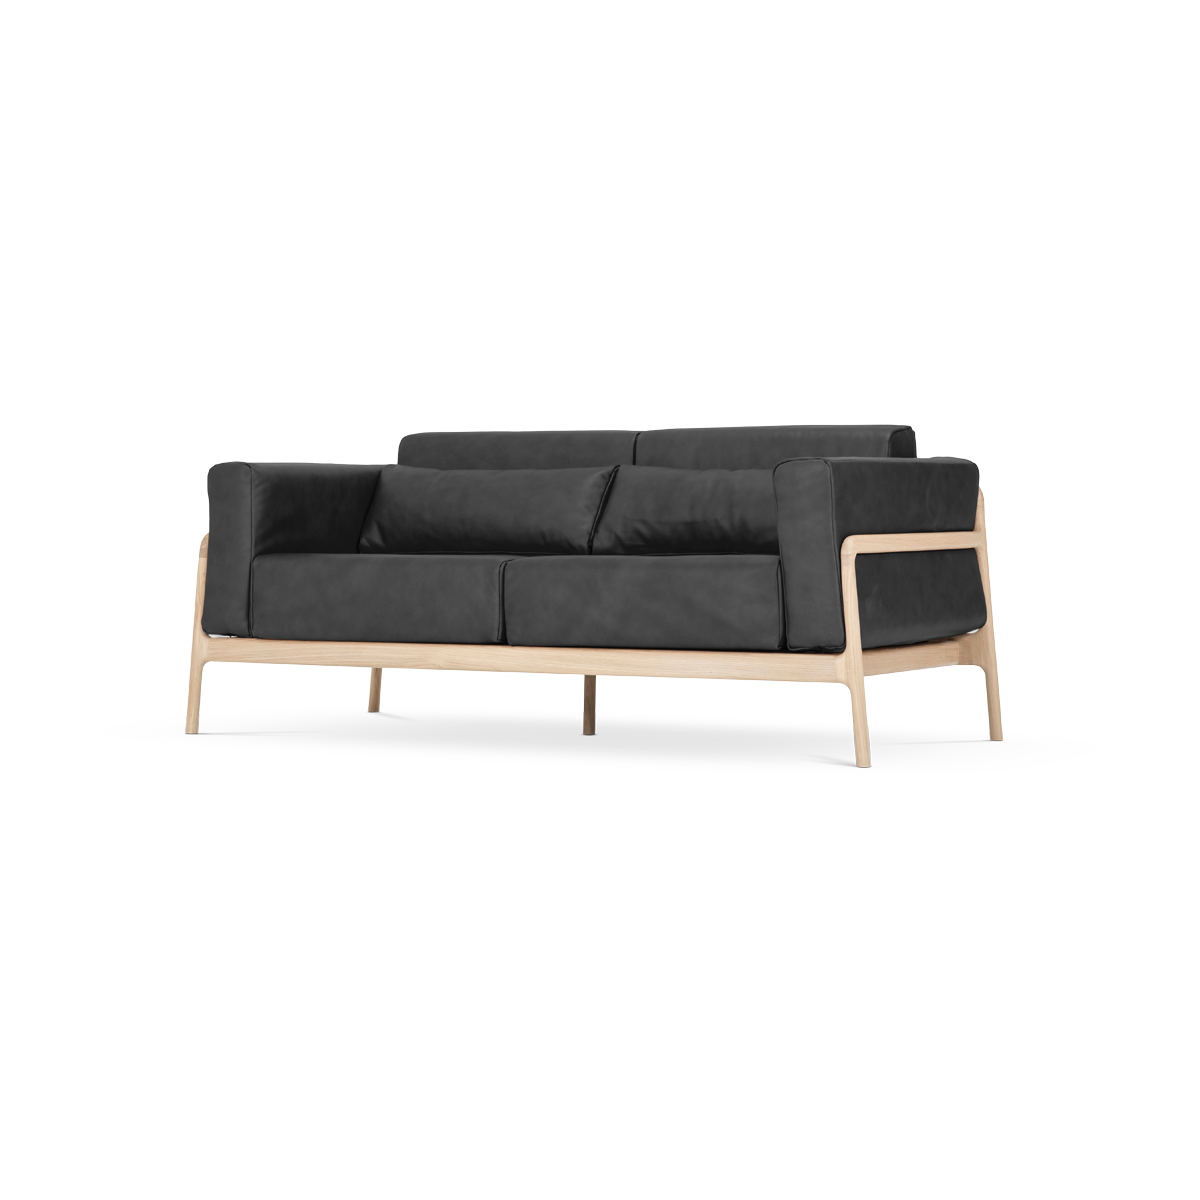 Fawn sofa 2 seater bank dakar leather black 0500 - 180 cm